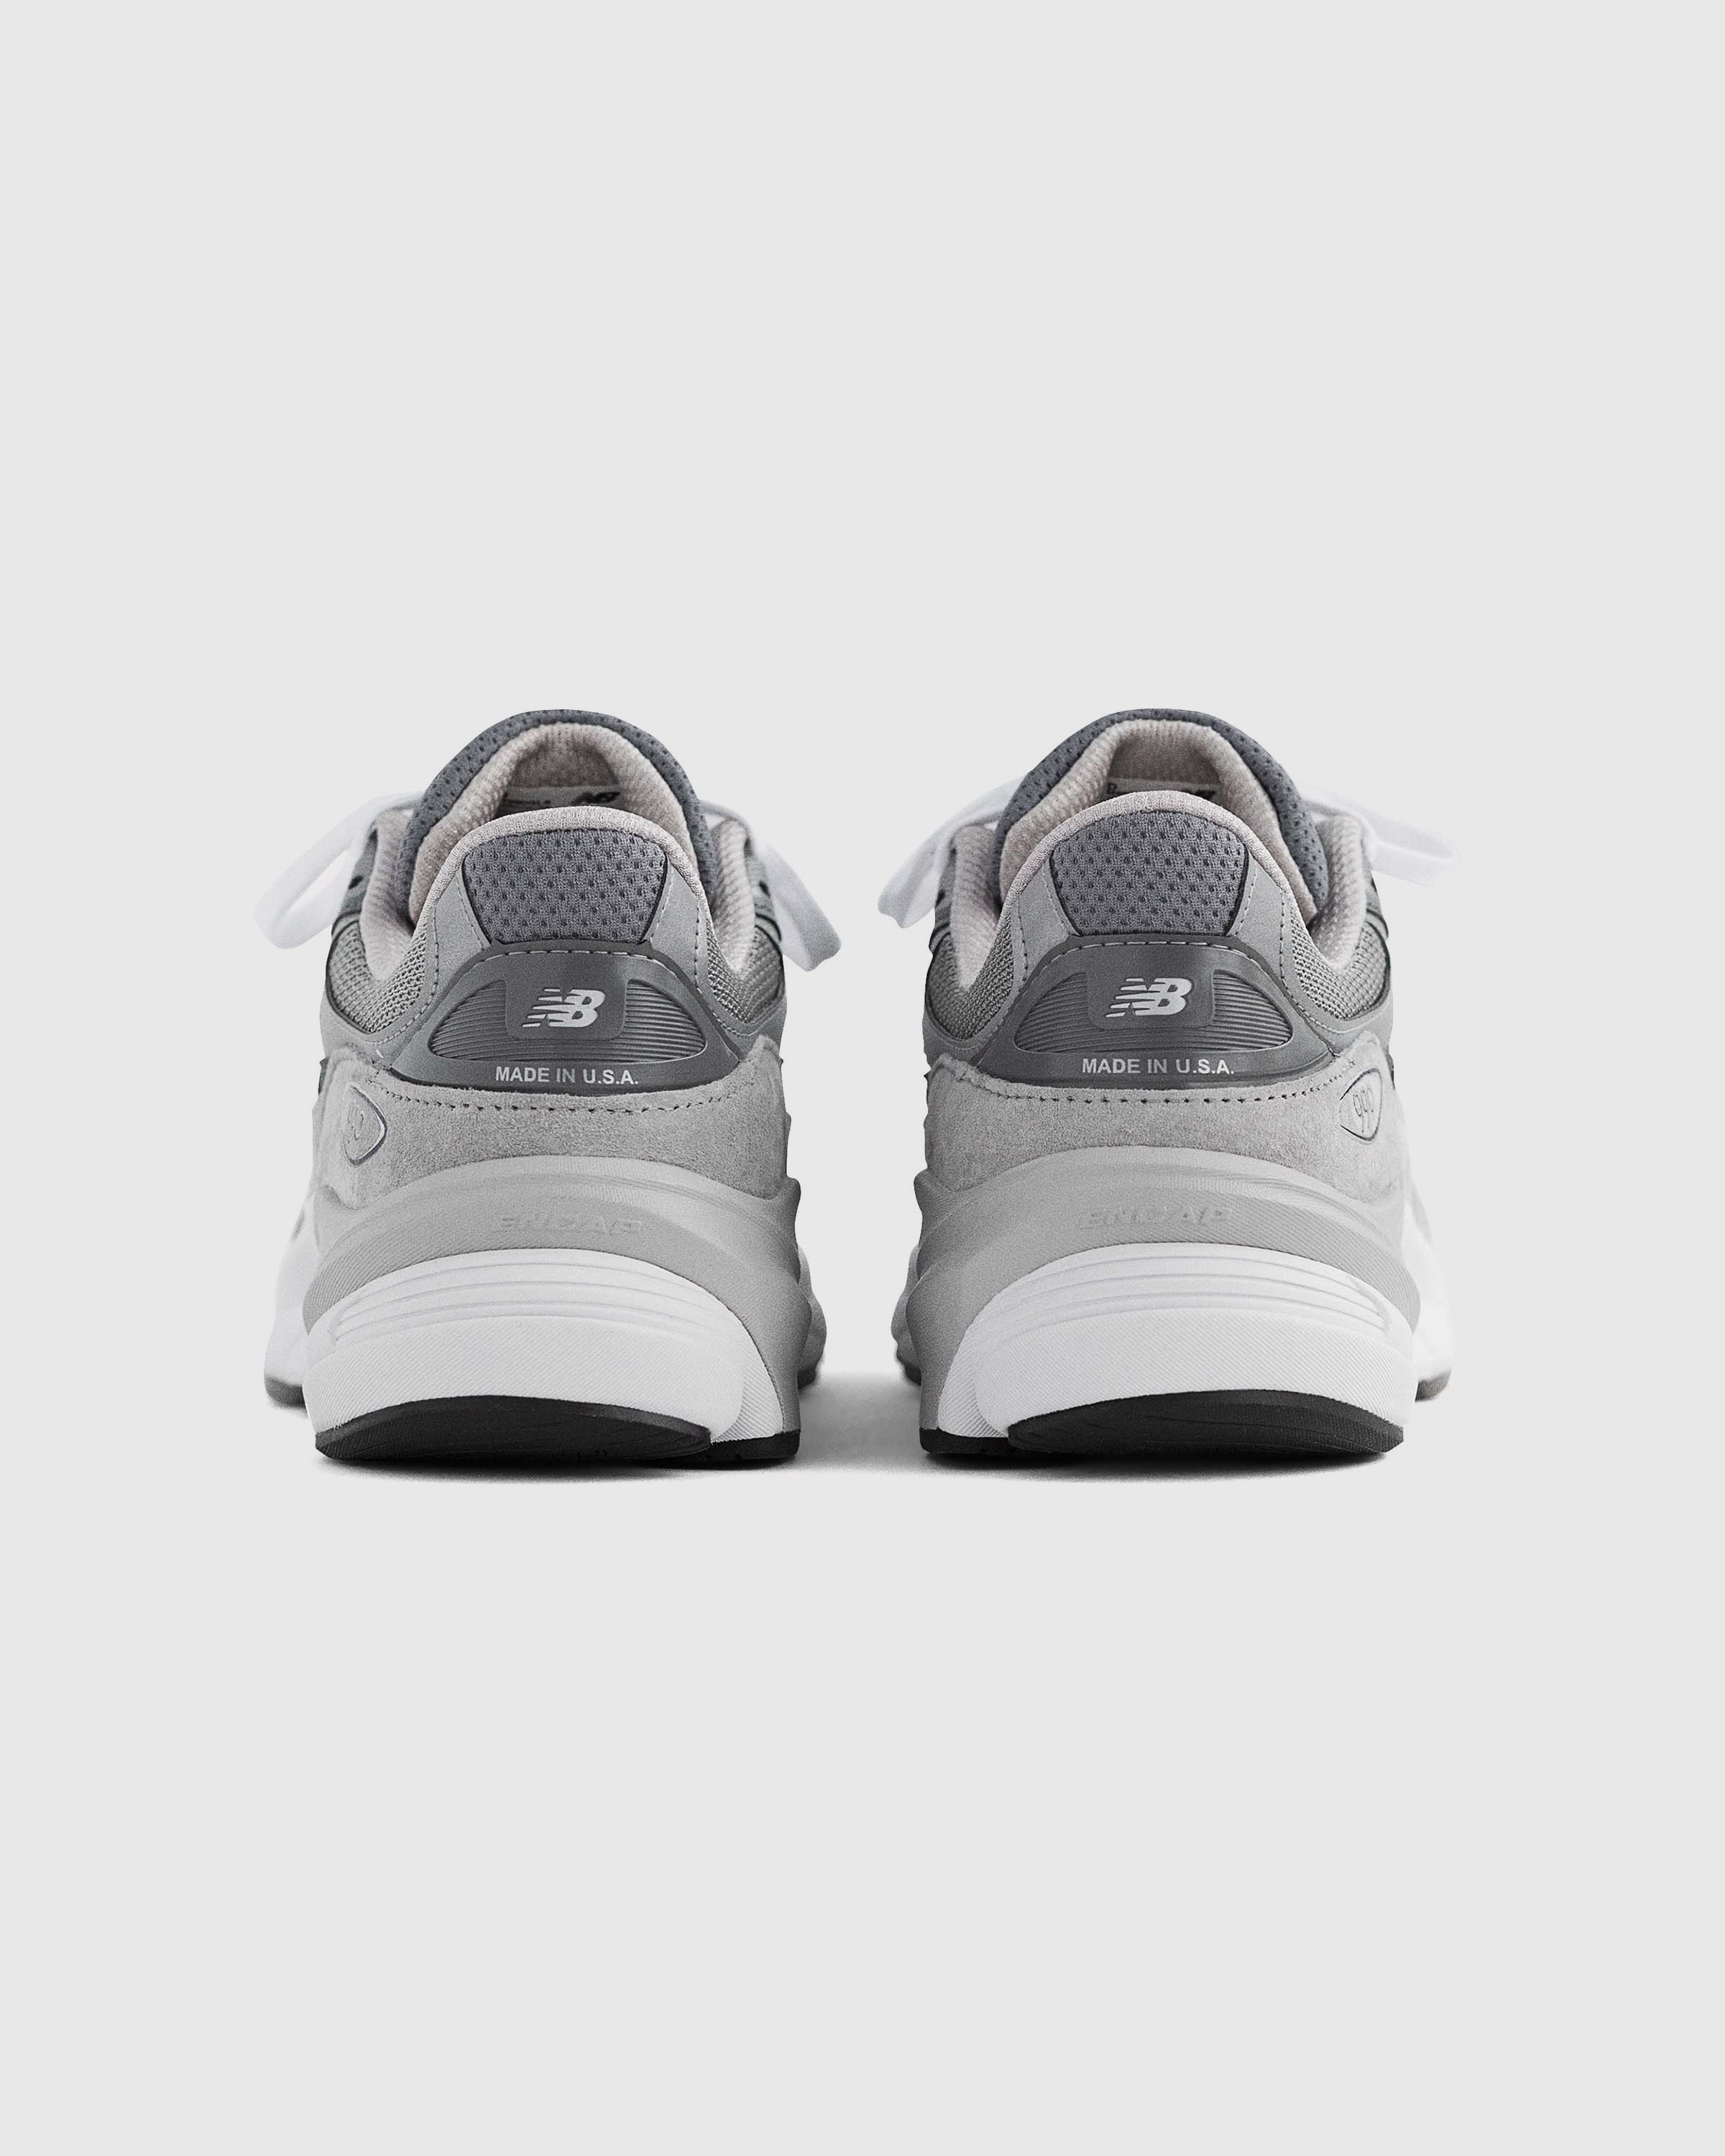 New Balance - M 990v6 Cool Gray - Footwear - Grey - Image 4